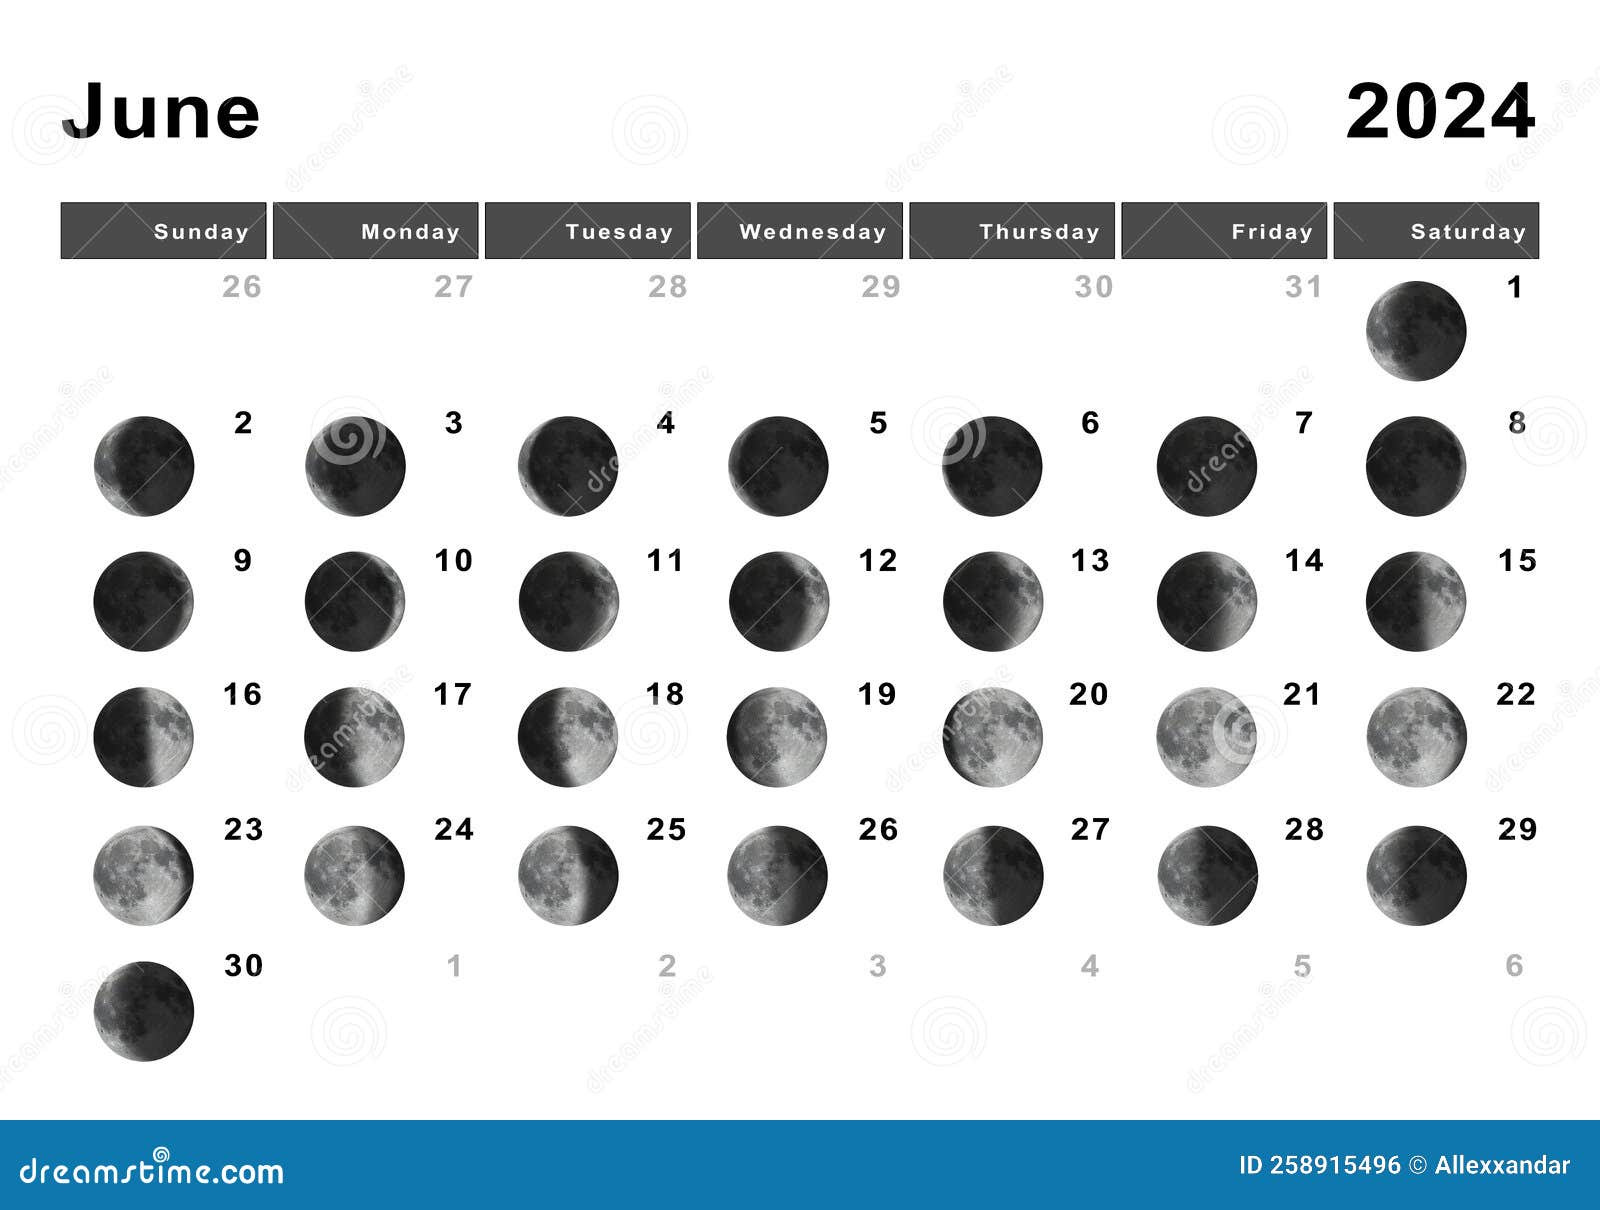 June 2024 Lunar Calendar, Moon Cycles Stock Illustration regarding June Moon Calendar 2024